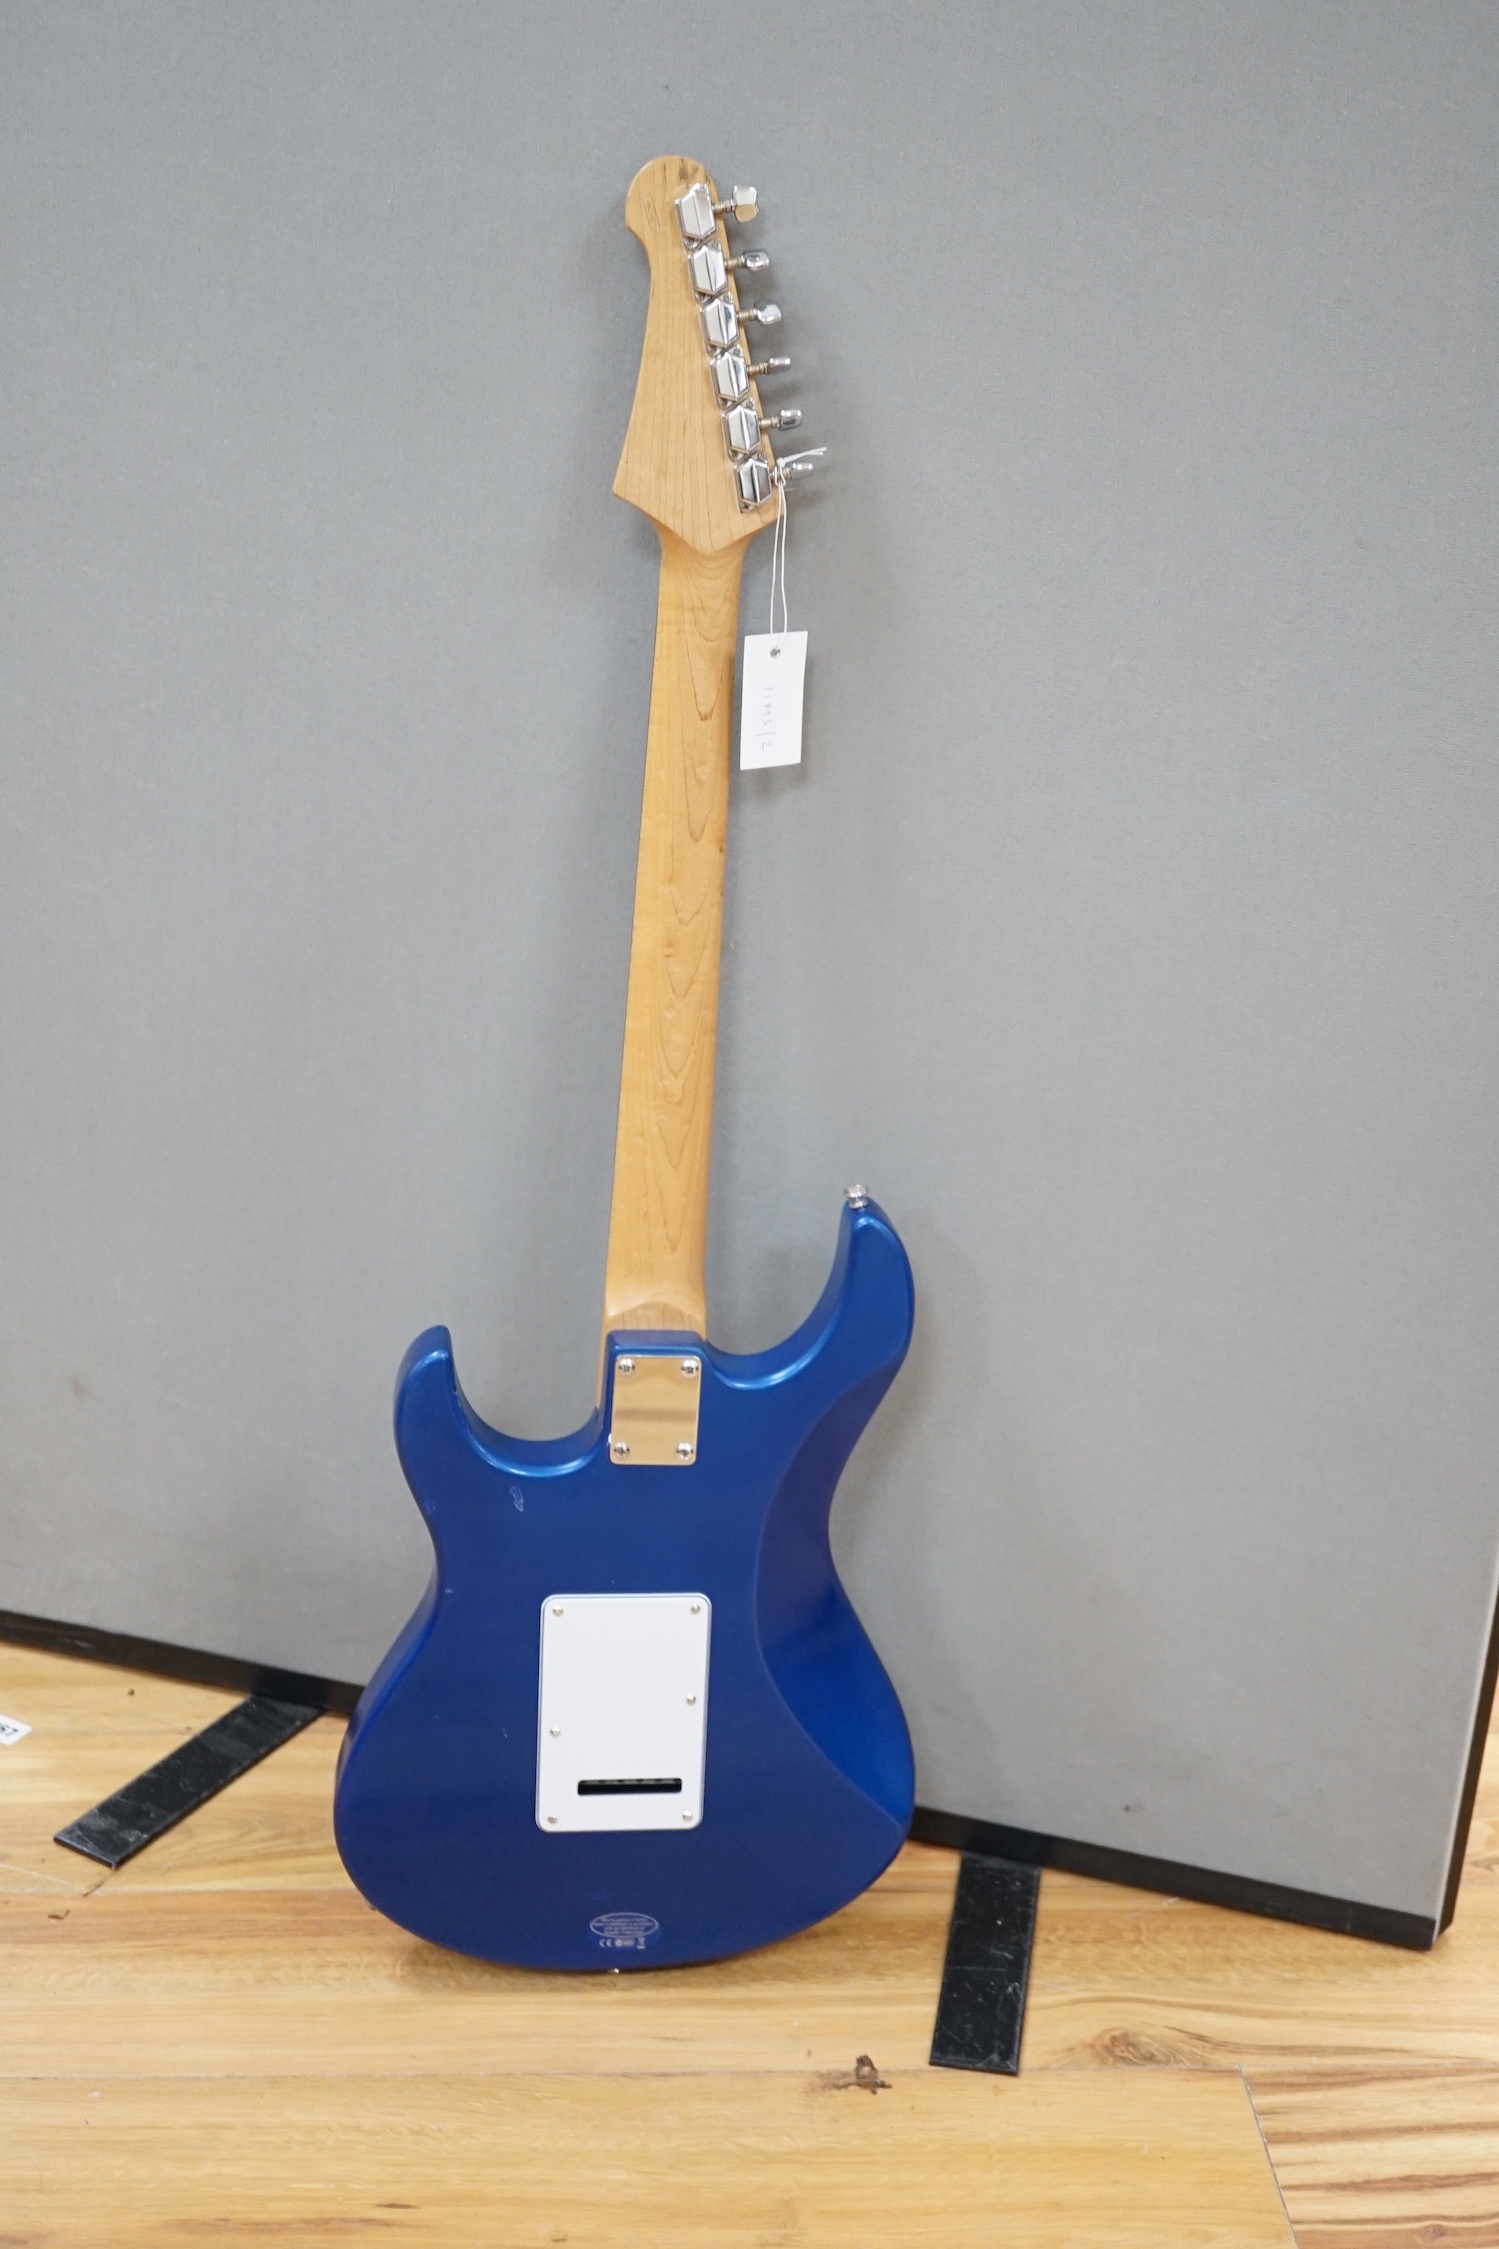 A Yamaha Pacifica electric guitar